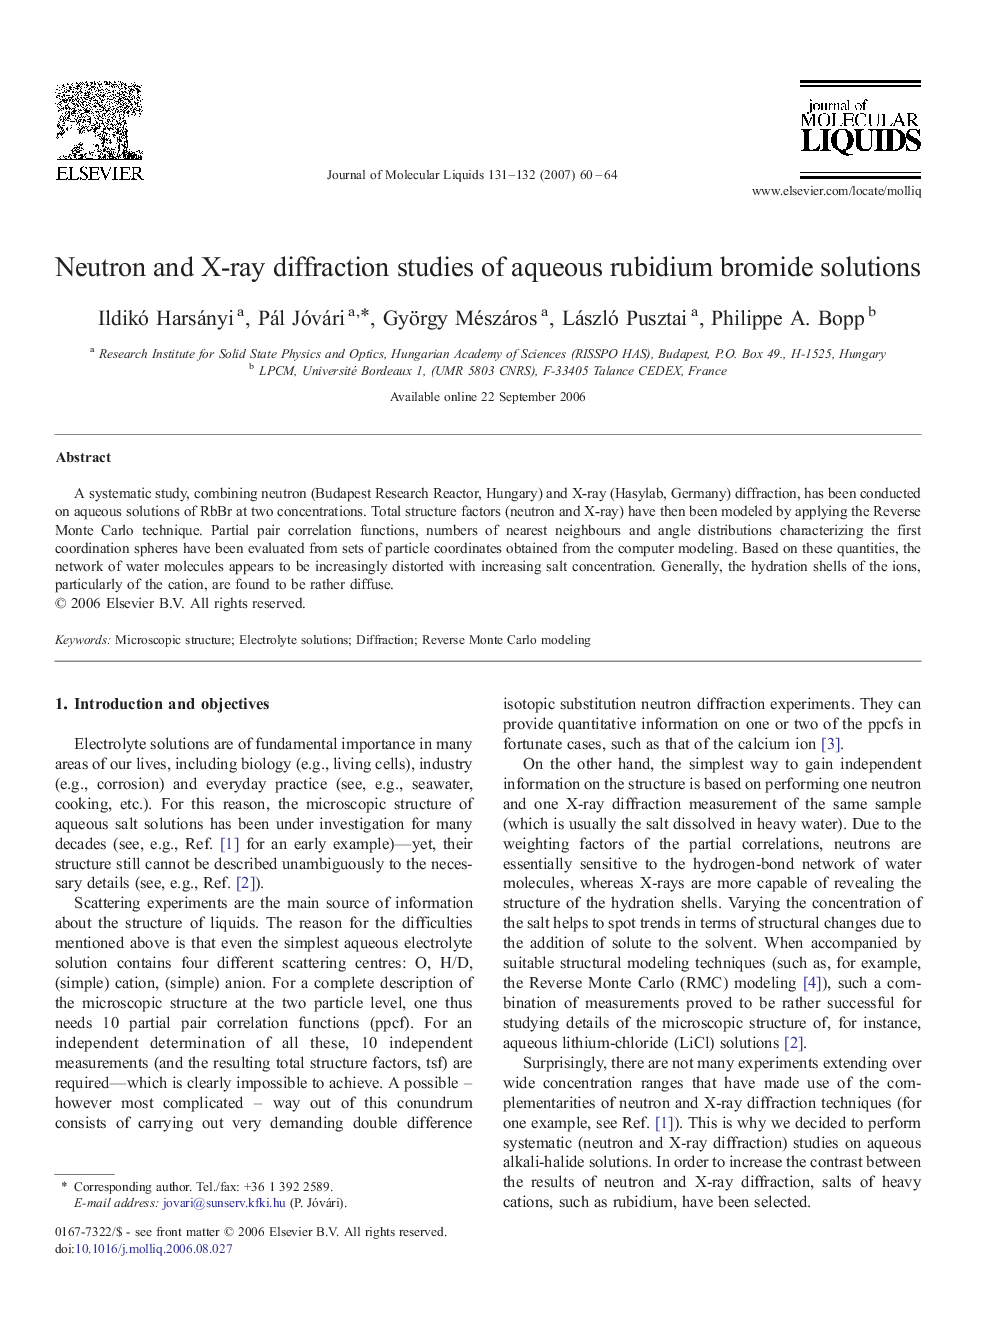 Neutron and X-ray diffraction studies of aqueous rubidium bromide solutions